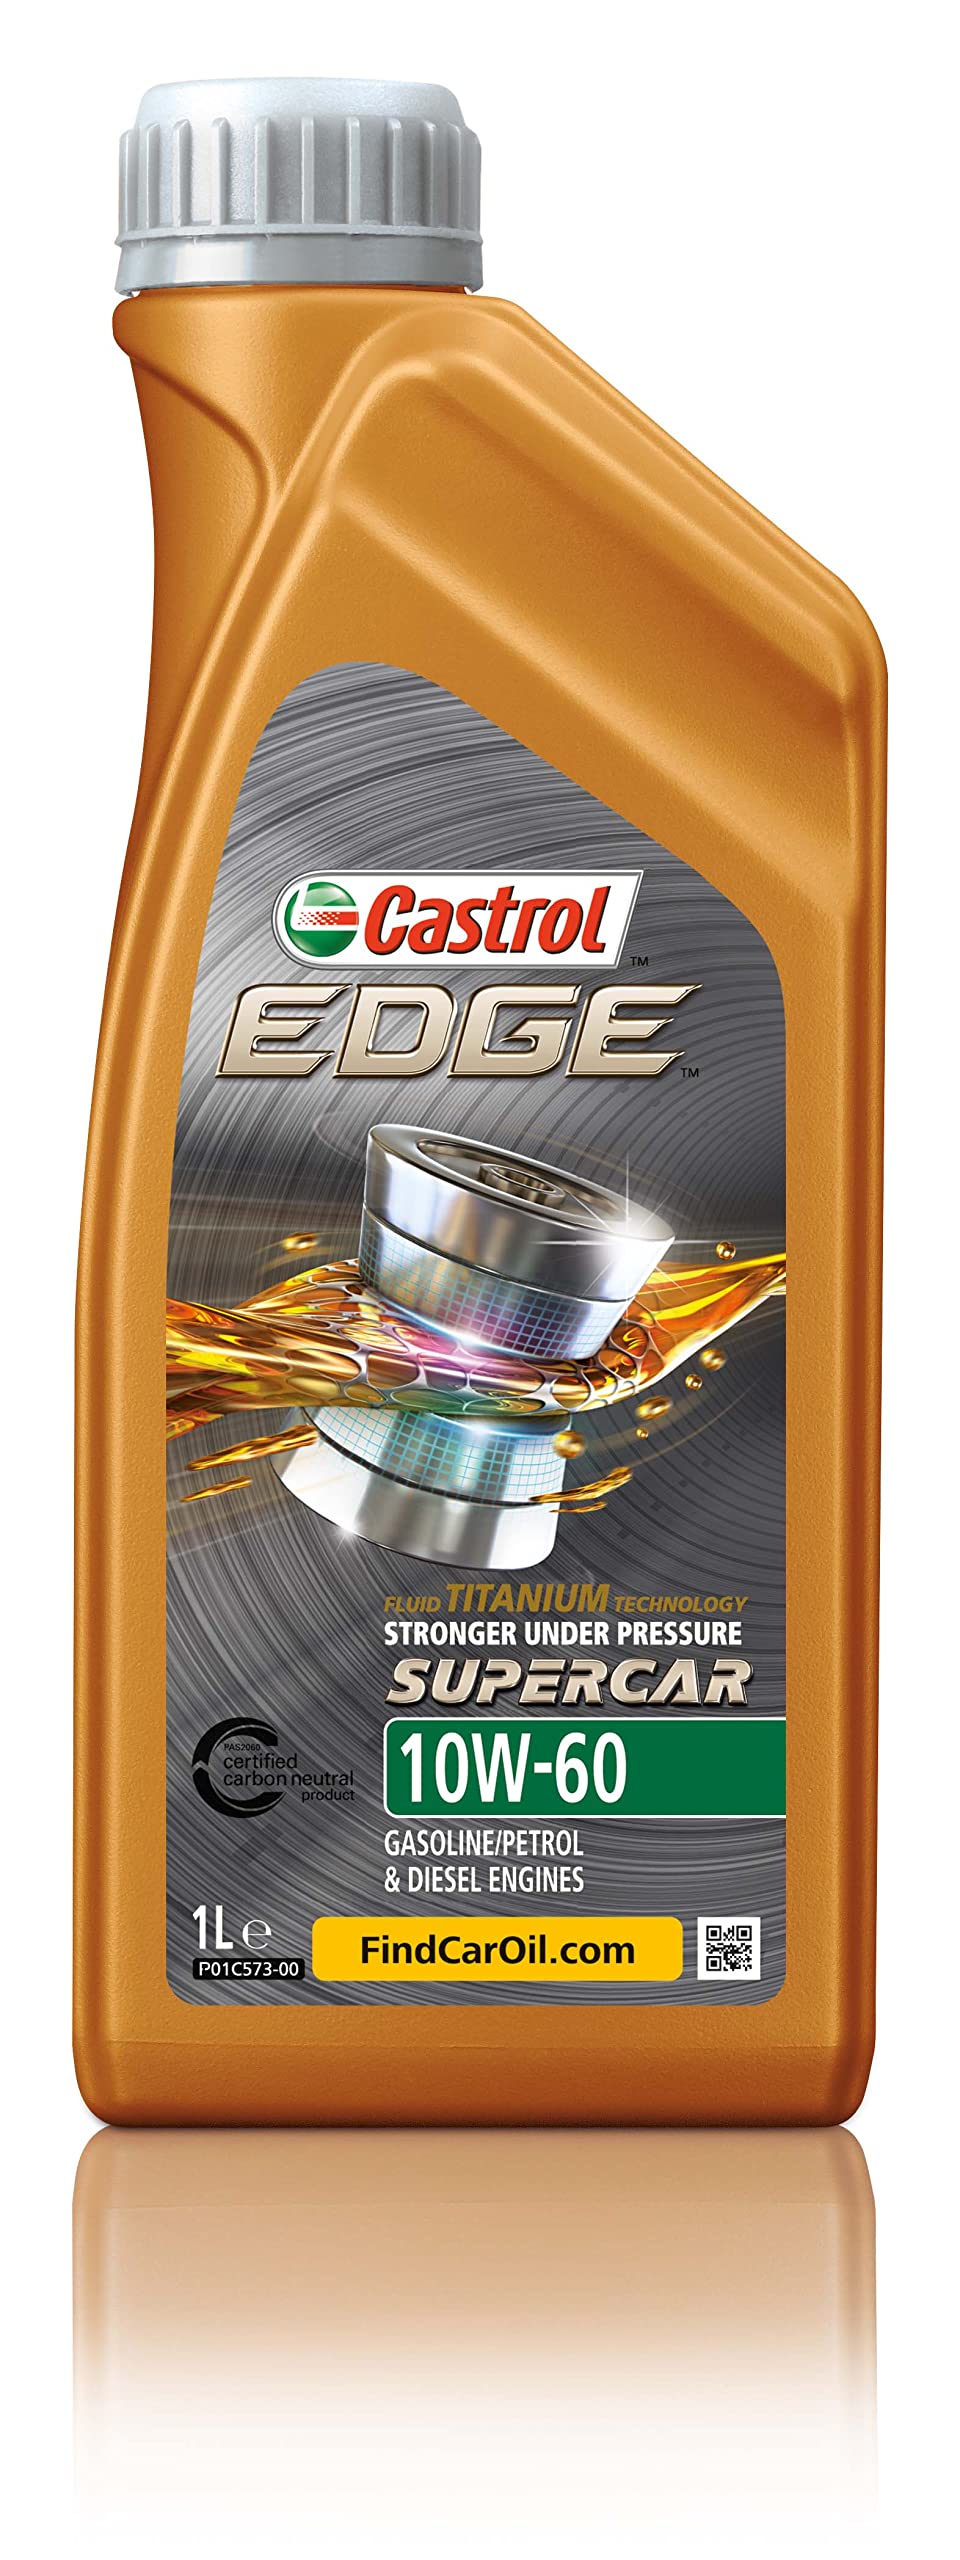 Castrol EDGE SUPERCAR 10W-60 Engine Oil 1L von Castrol